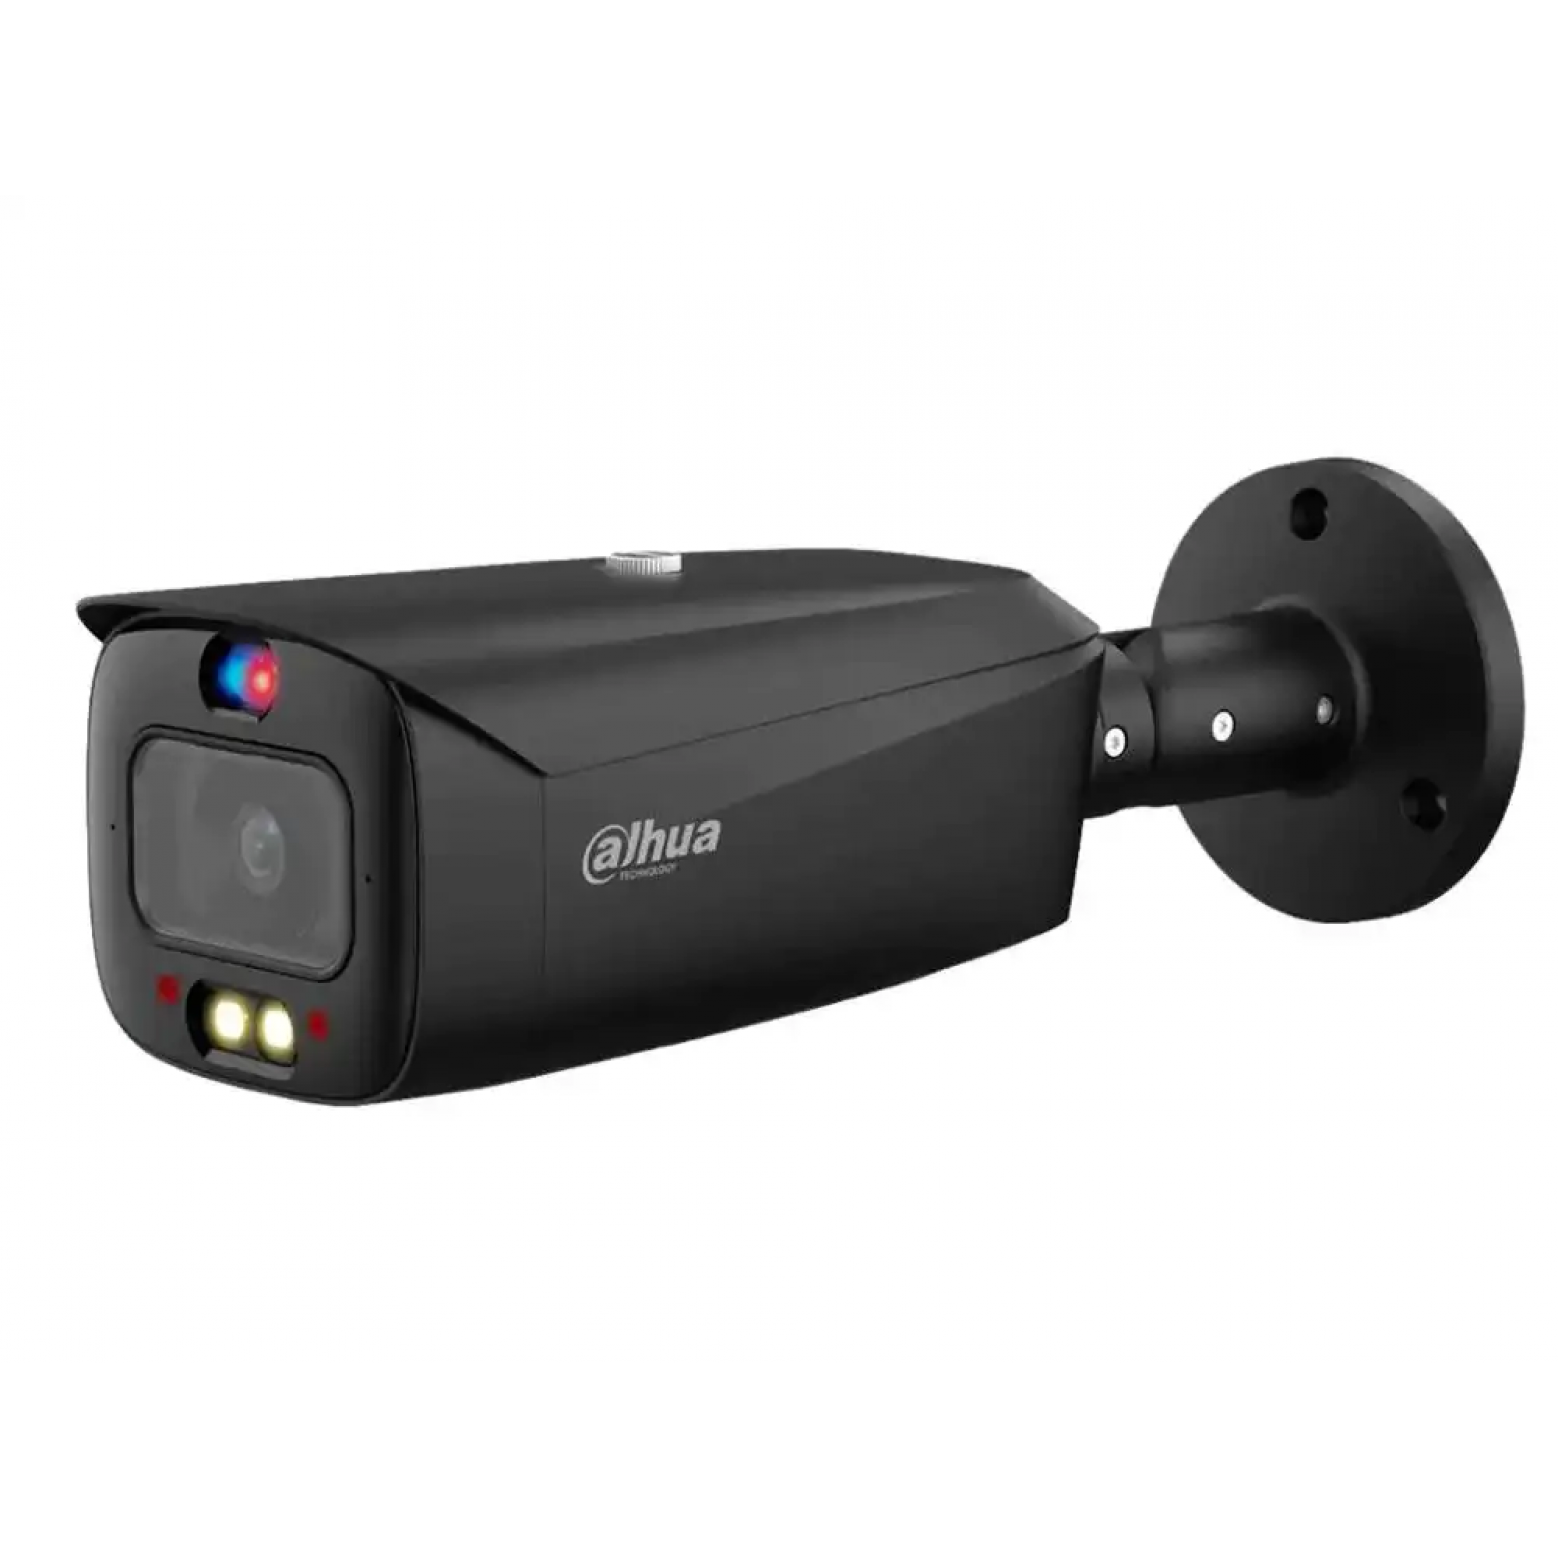 Dahua IPC-HFW3849T1-AS-PV-S4-B - Wiszense - Täysväri - Tioc - IP - Bullet-kamera - 8MP - Varifocal 2.7-13.5mm - PoE - Musta